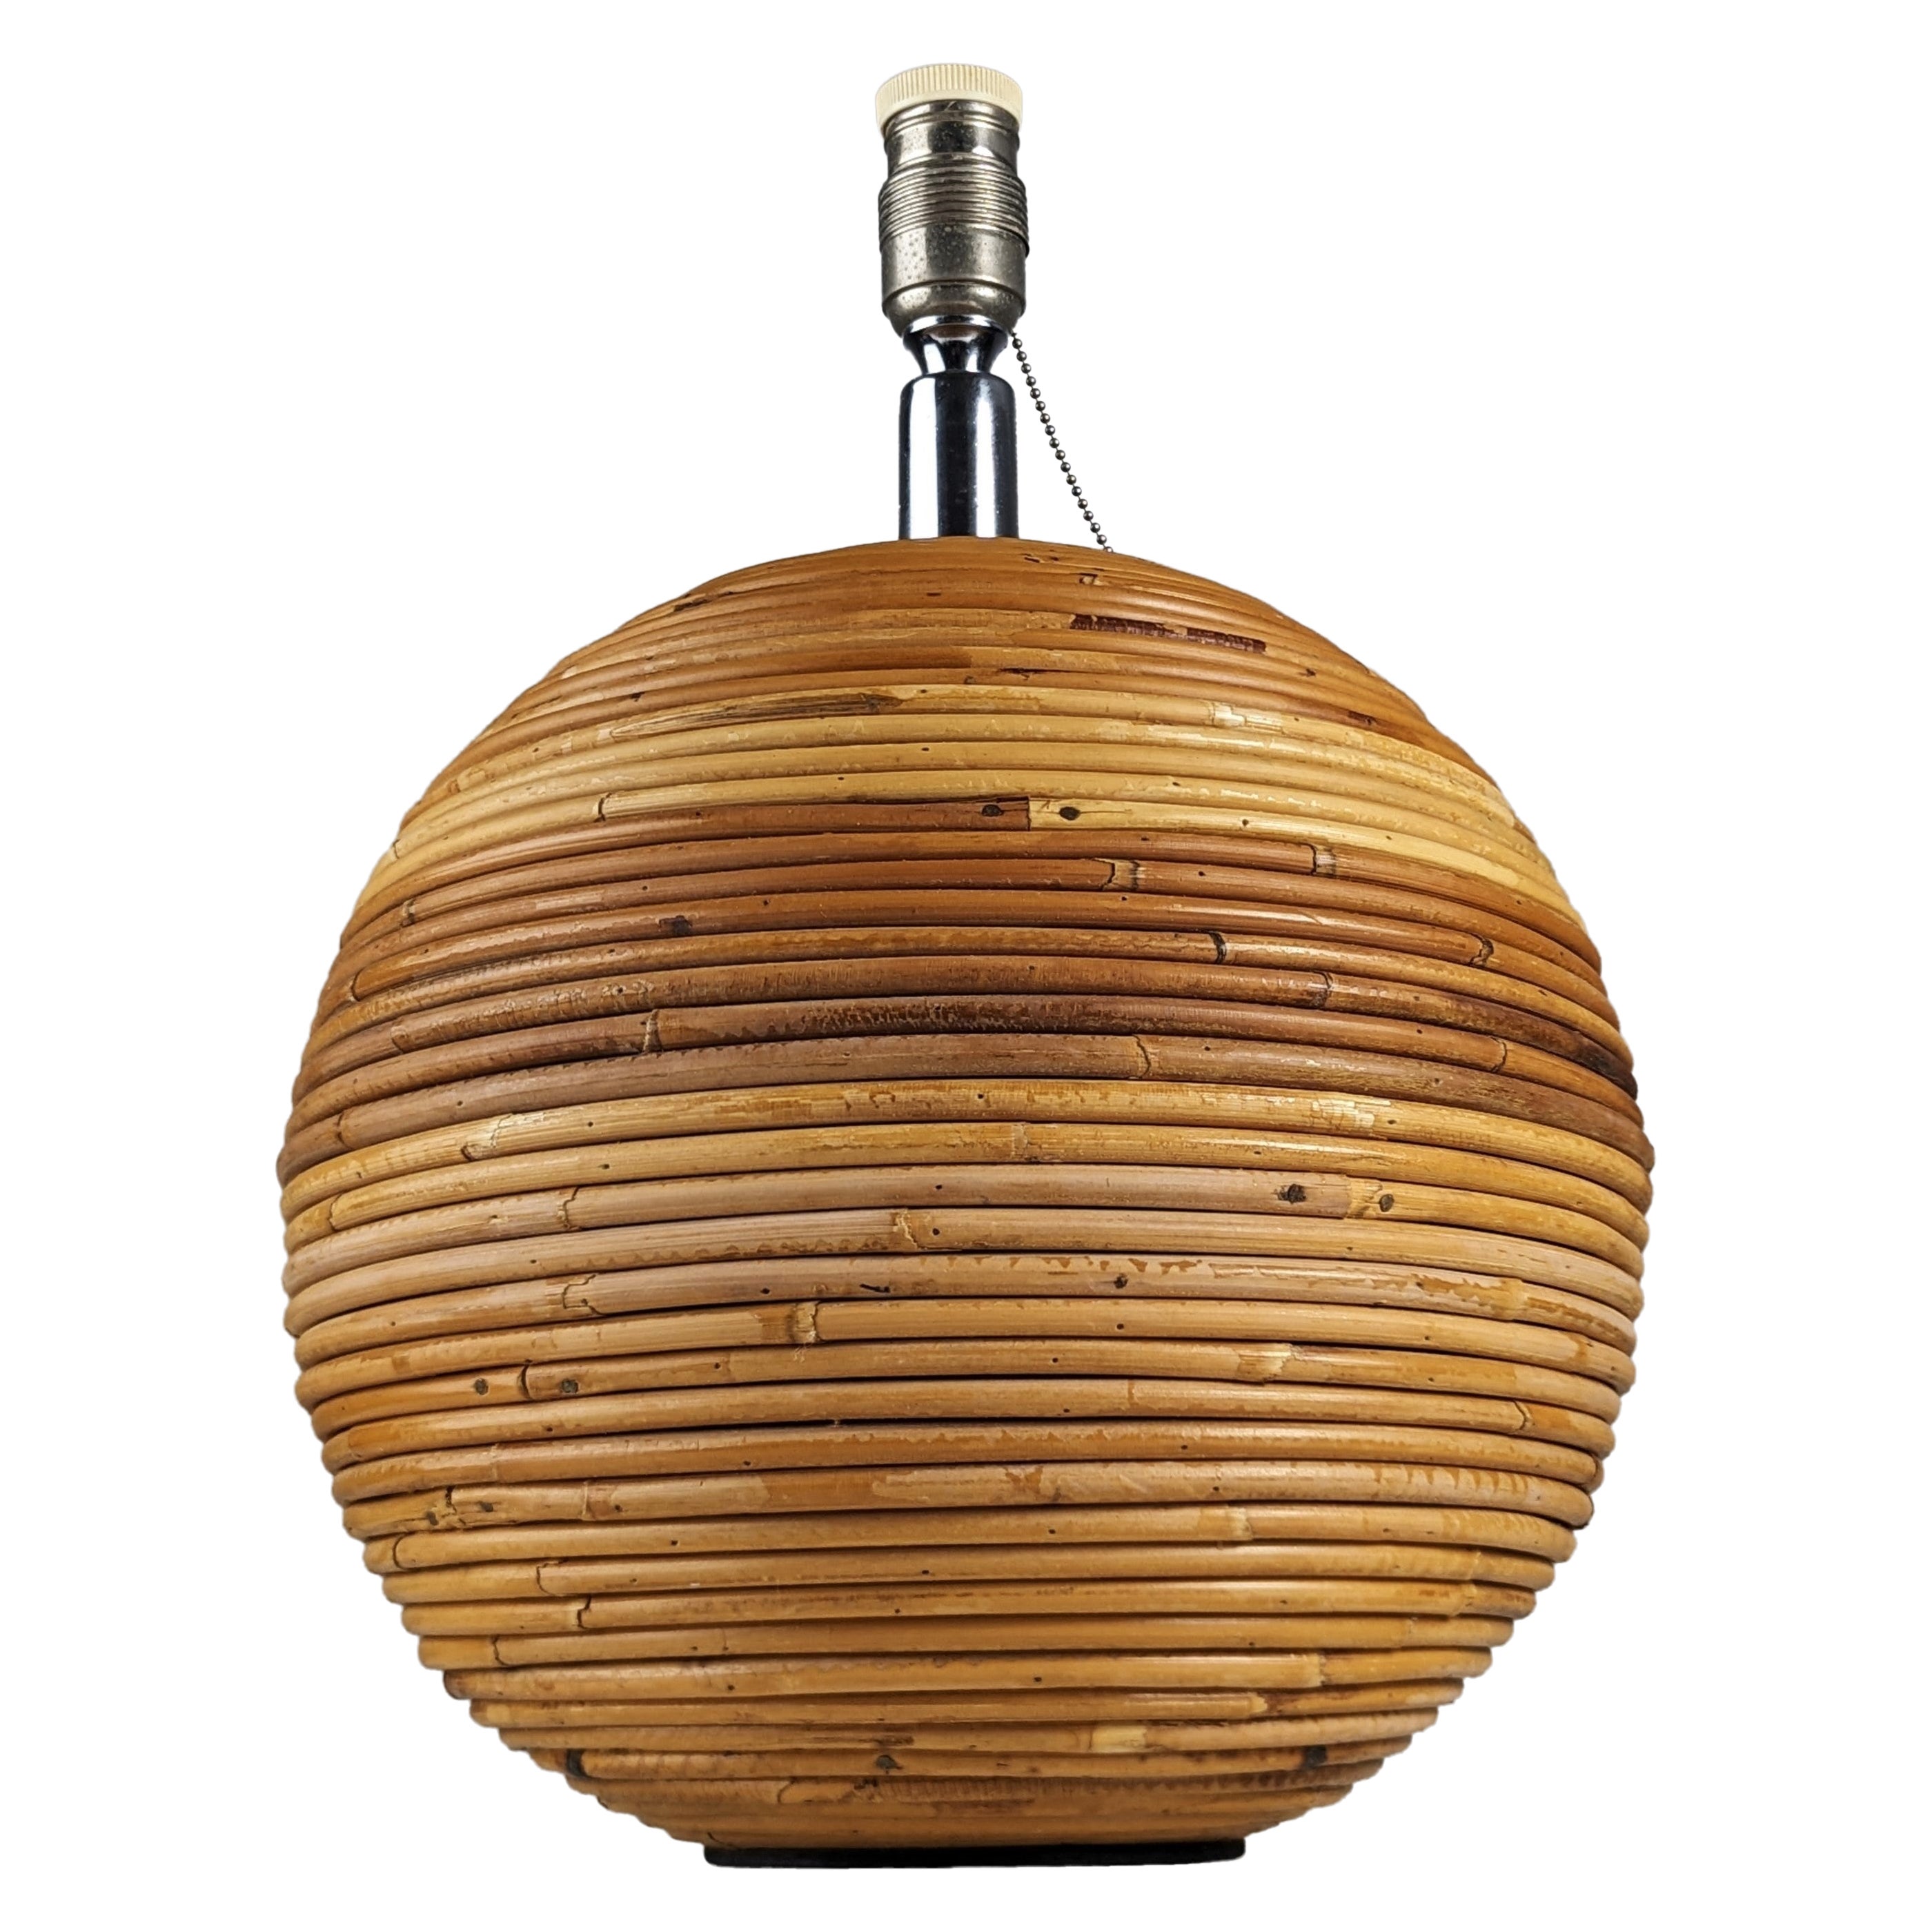 Gabriella Crespi style sphere rattan table lamp, 1970s For Sale